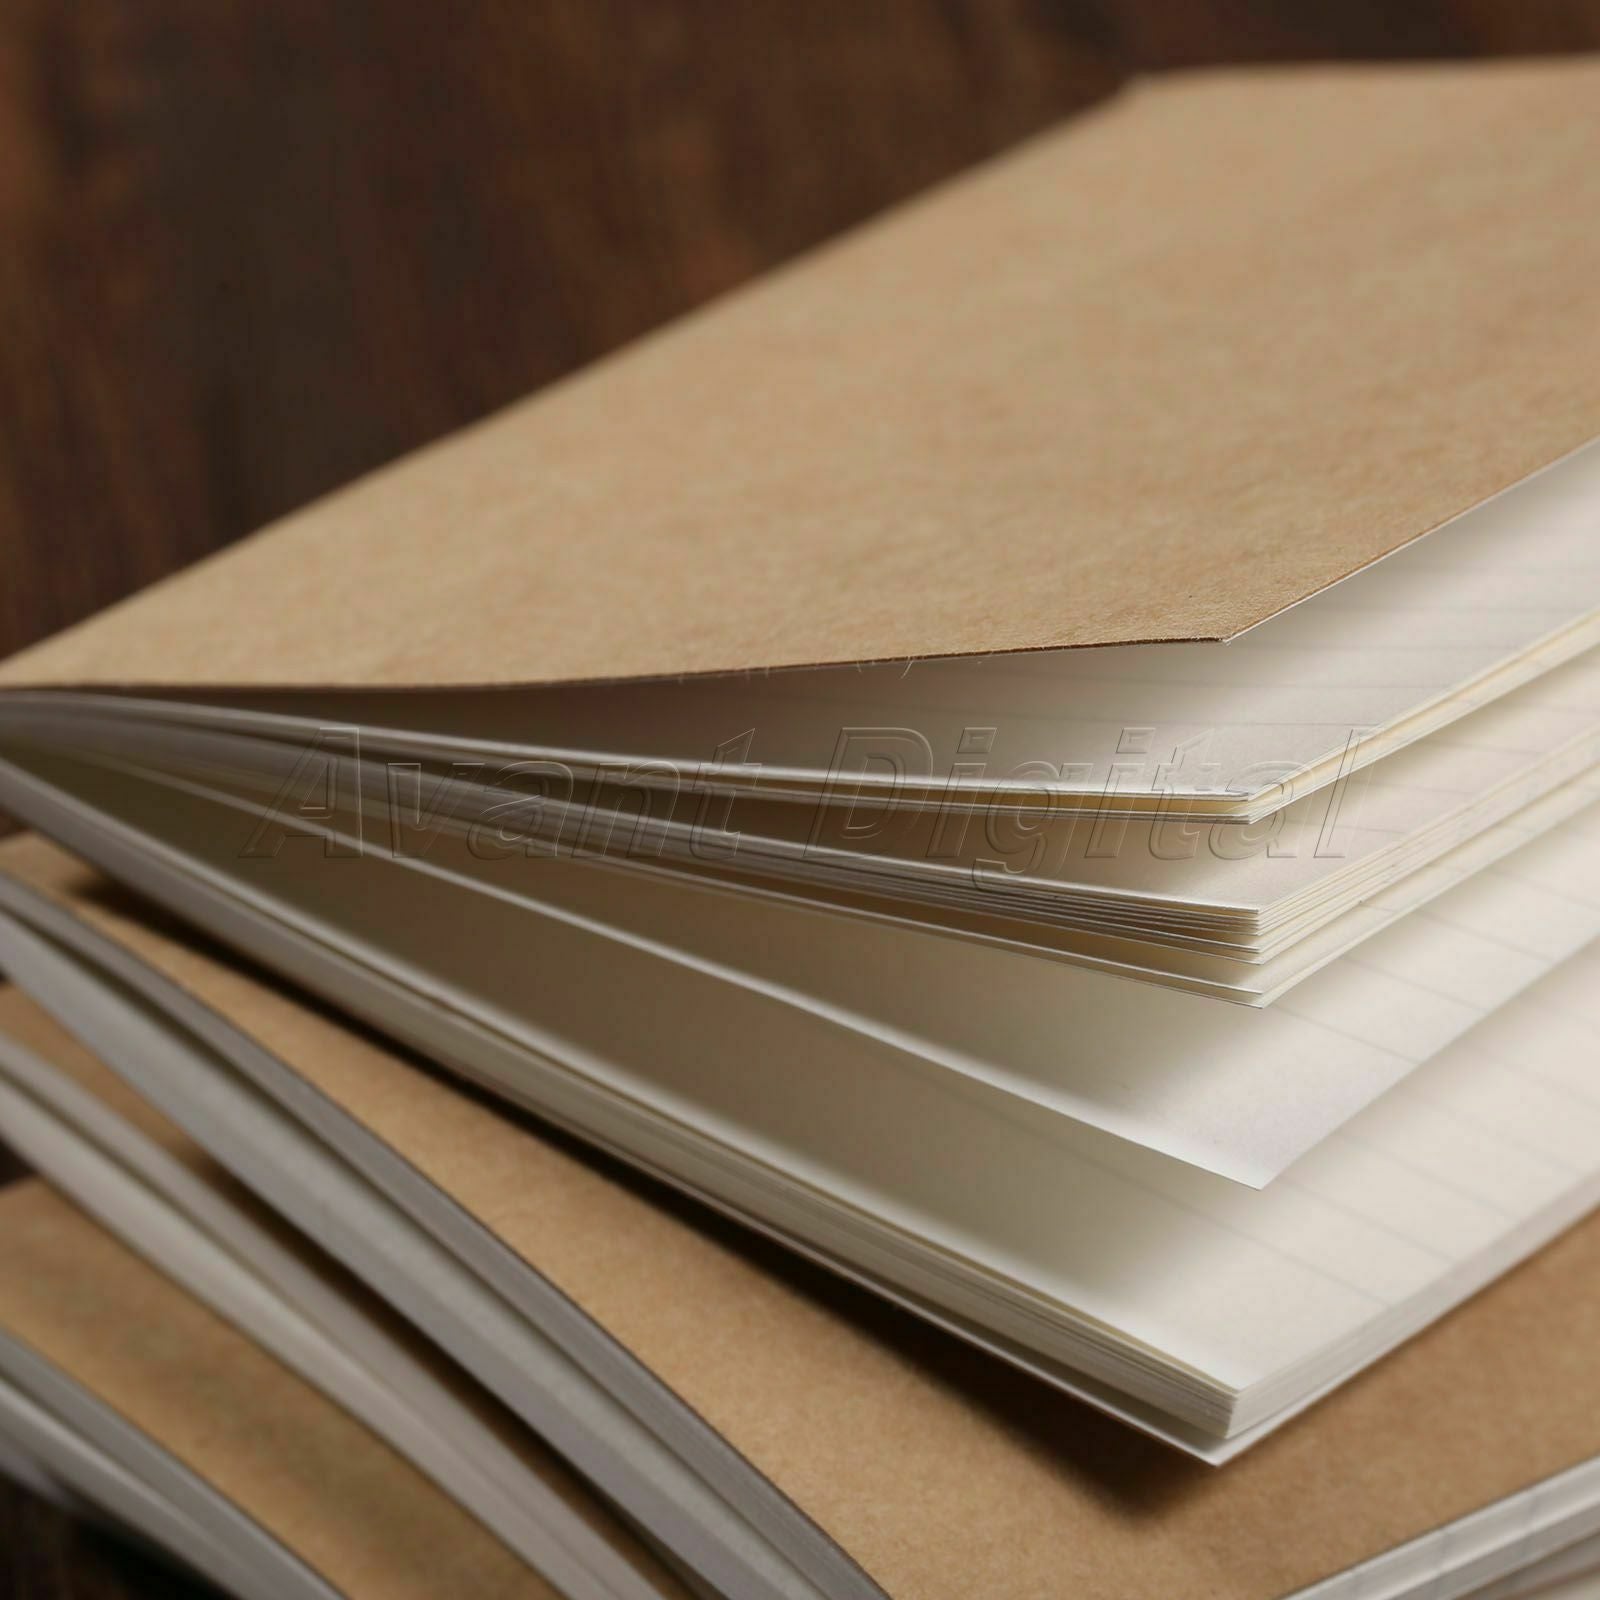 6 Set Blank Paper Refill For Notepad Passport Notebook Diary Journal Sketchbook